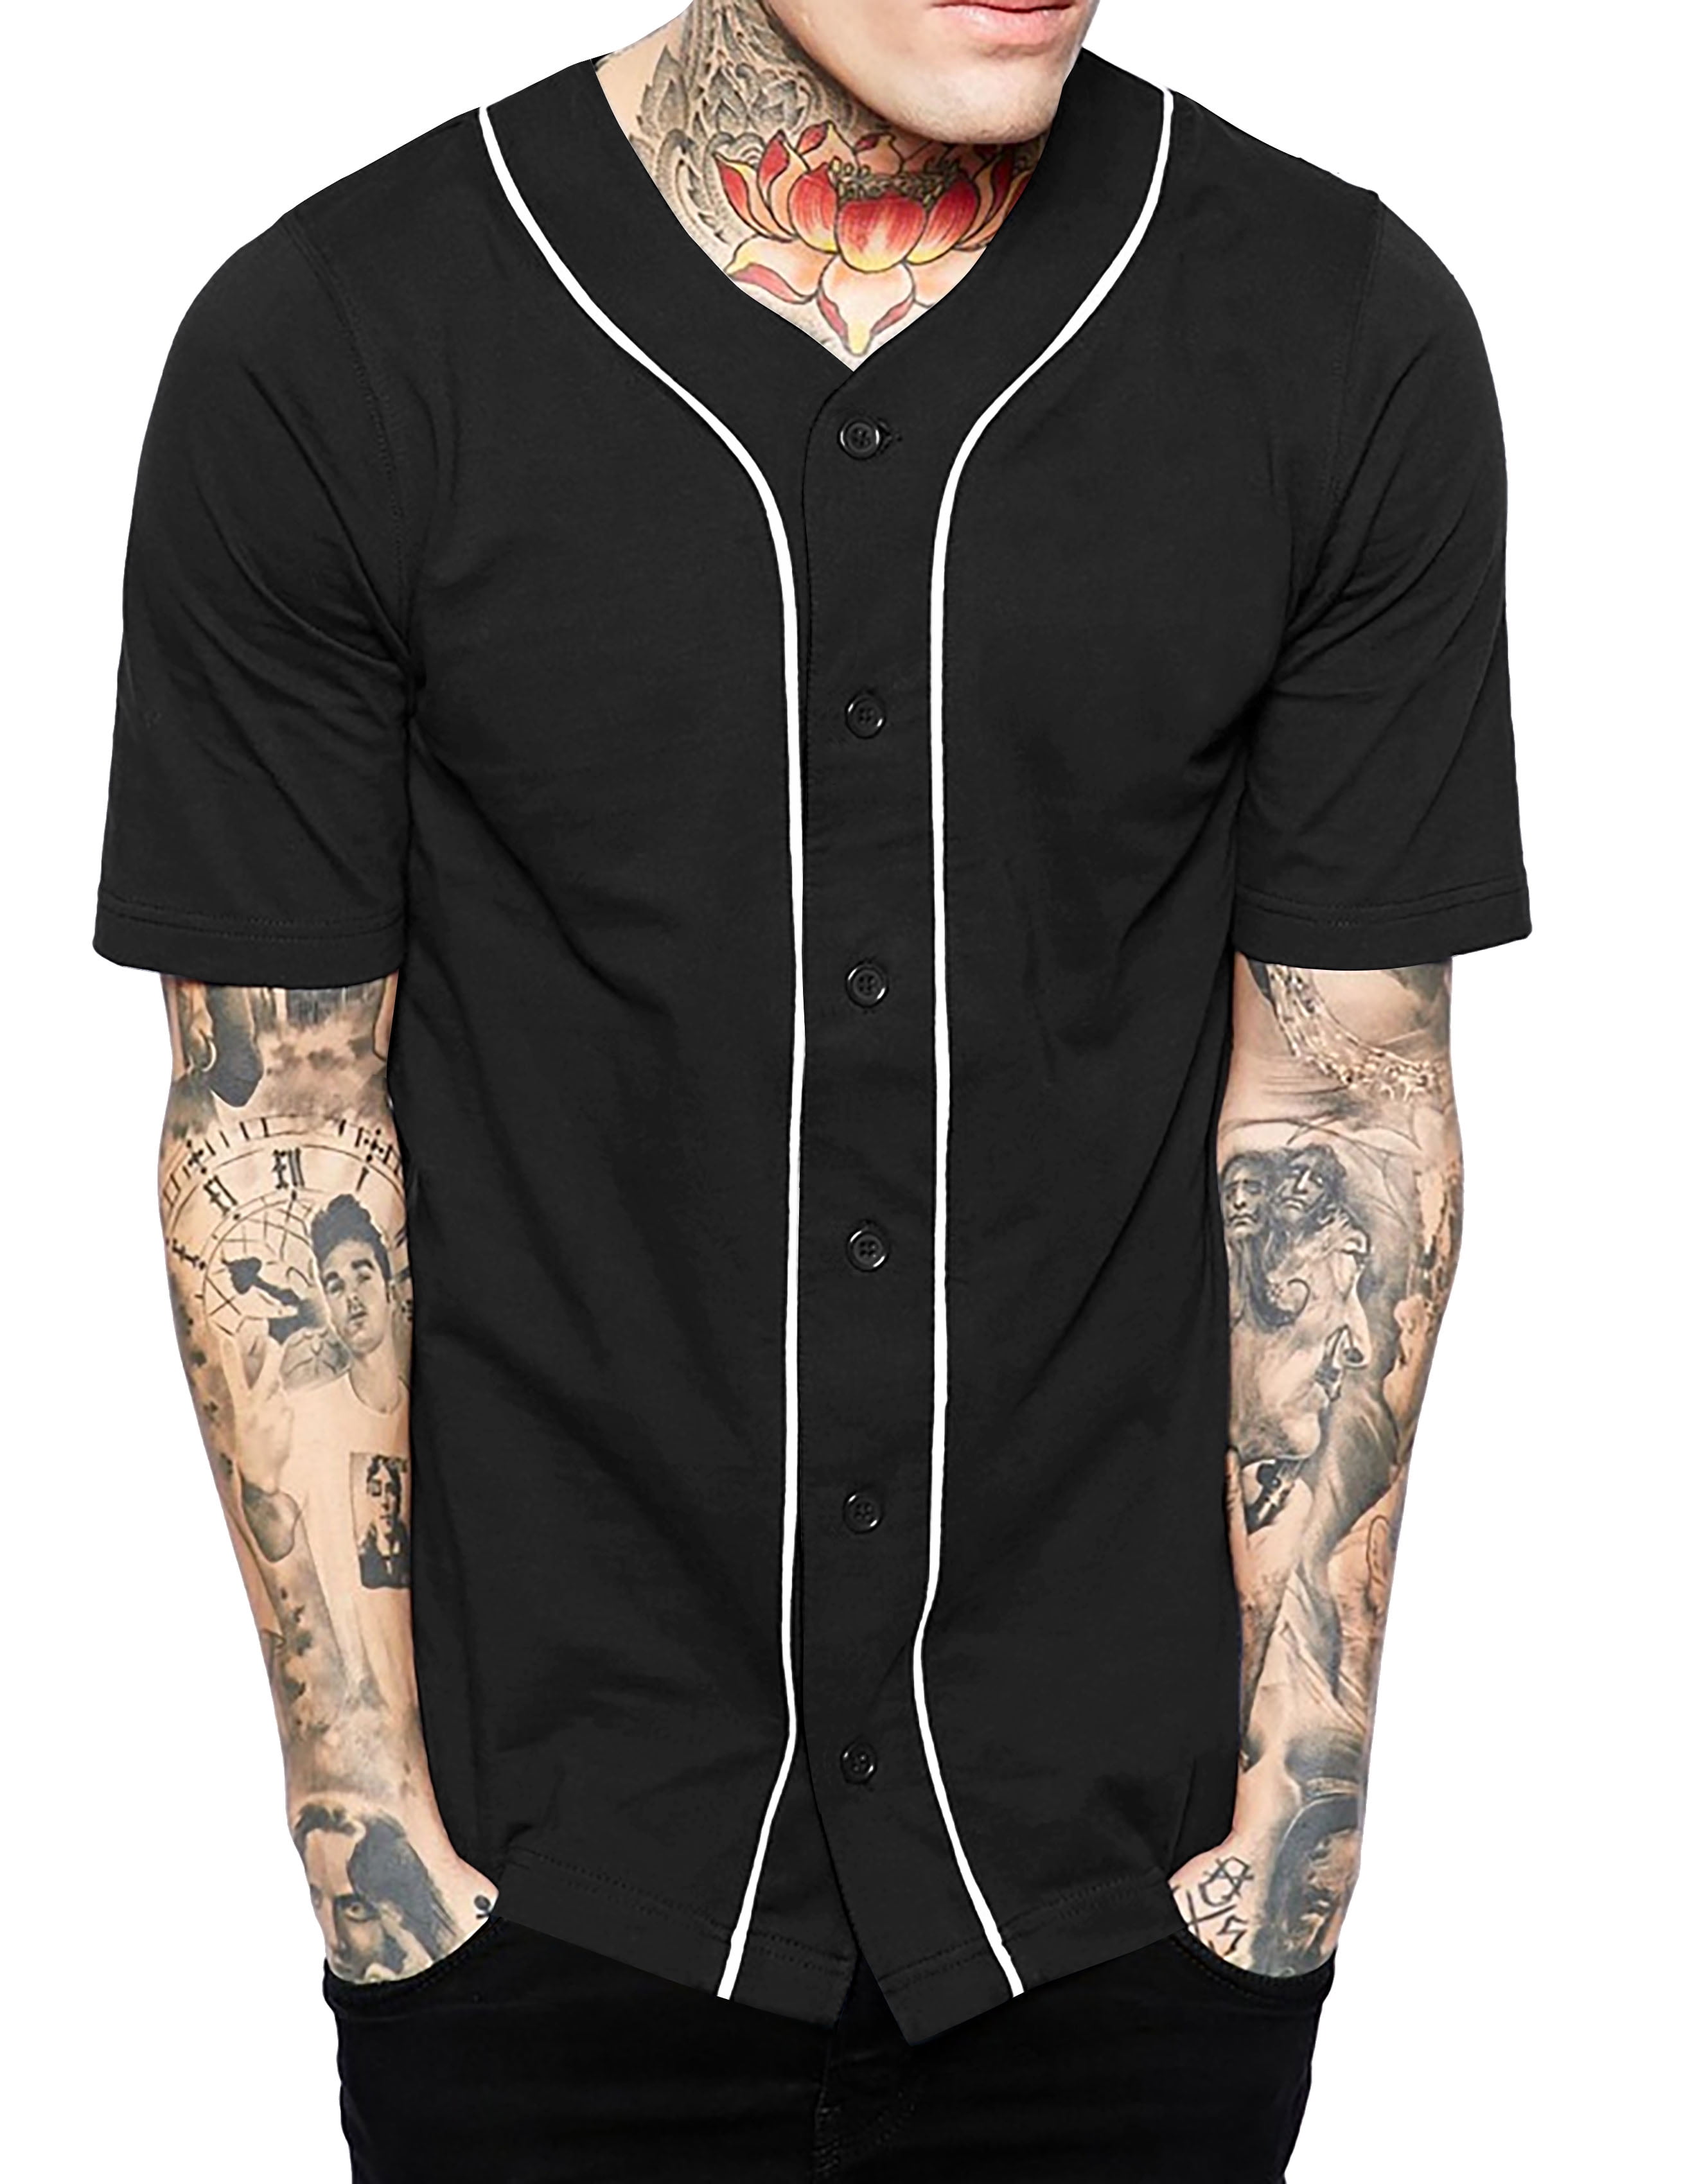 baseball button shirt